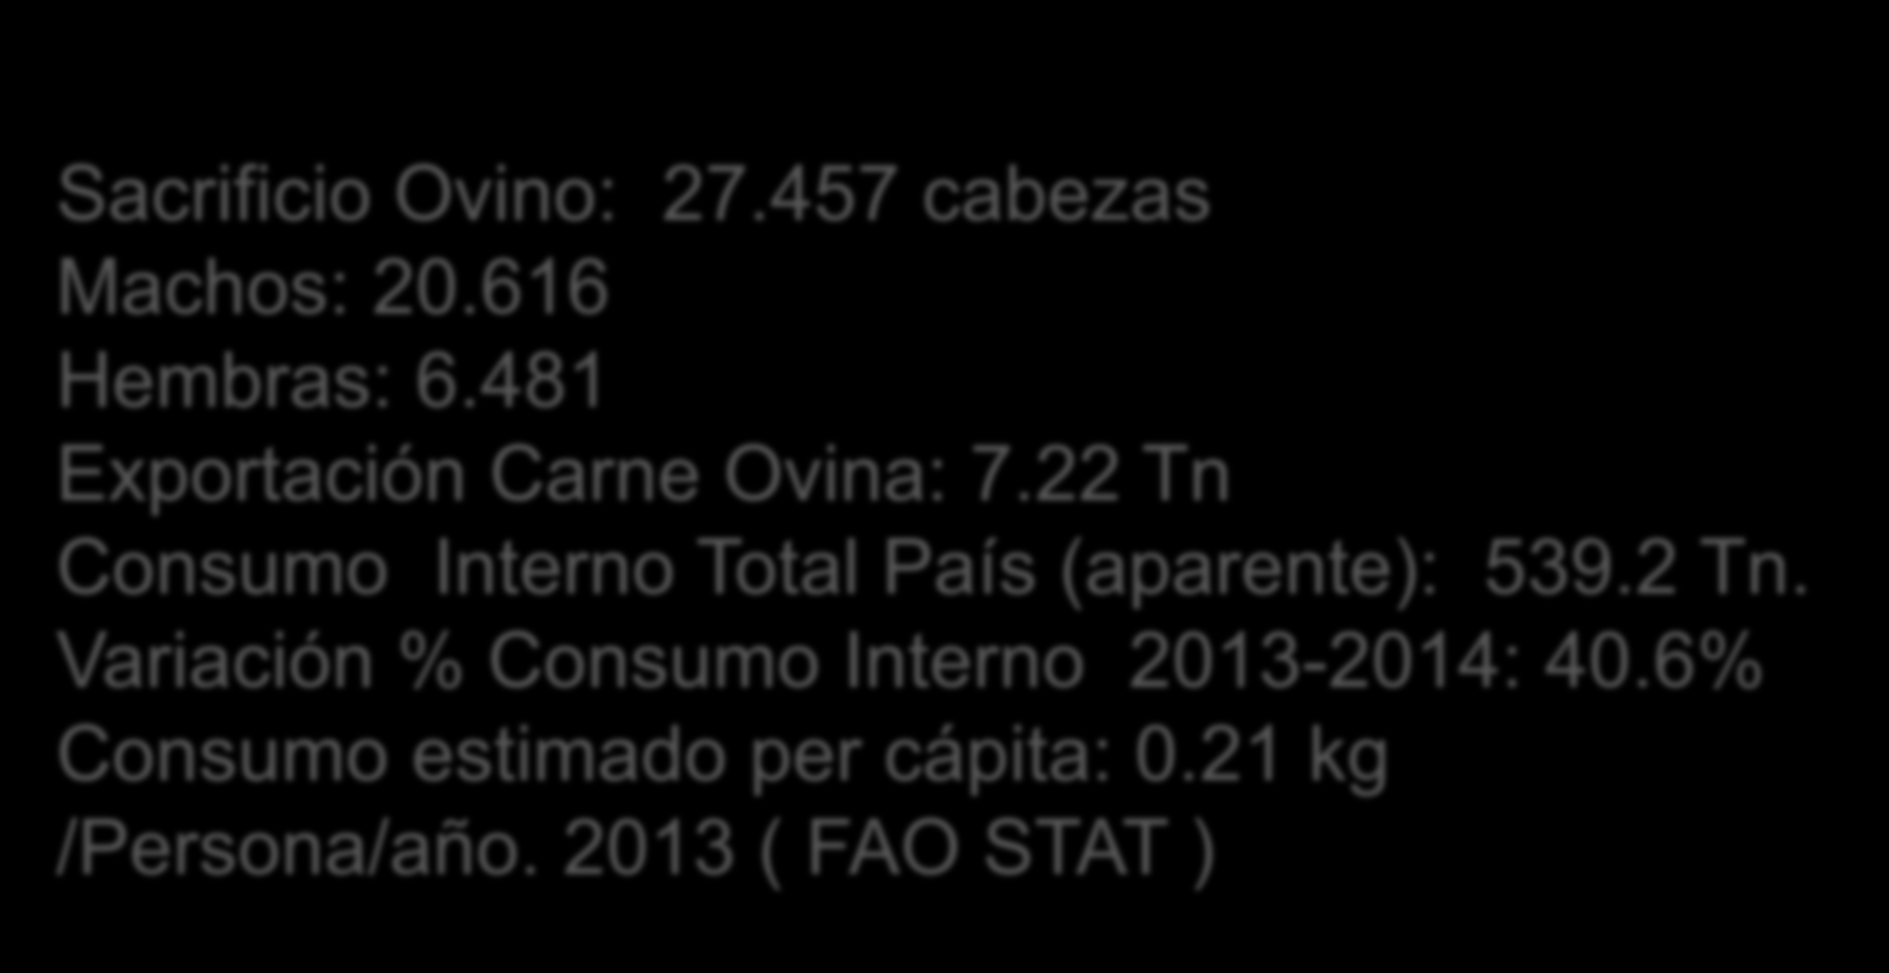 INDICADORES ACTIVIDAD OVINA 2014 Sacrificio Ovino: 27.457 cabezas Machos: 20.616 Hembras: 6.481 Exportación Carne Ovina: 7.